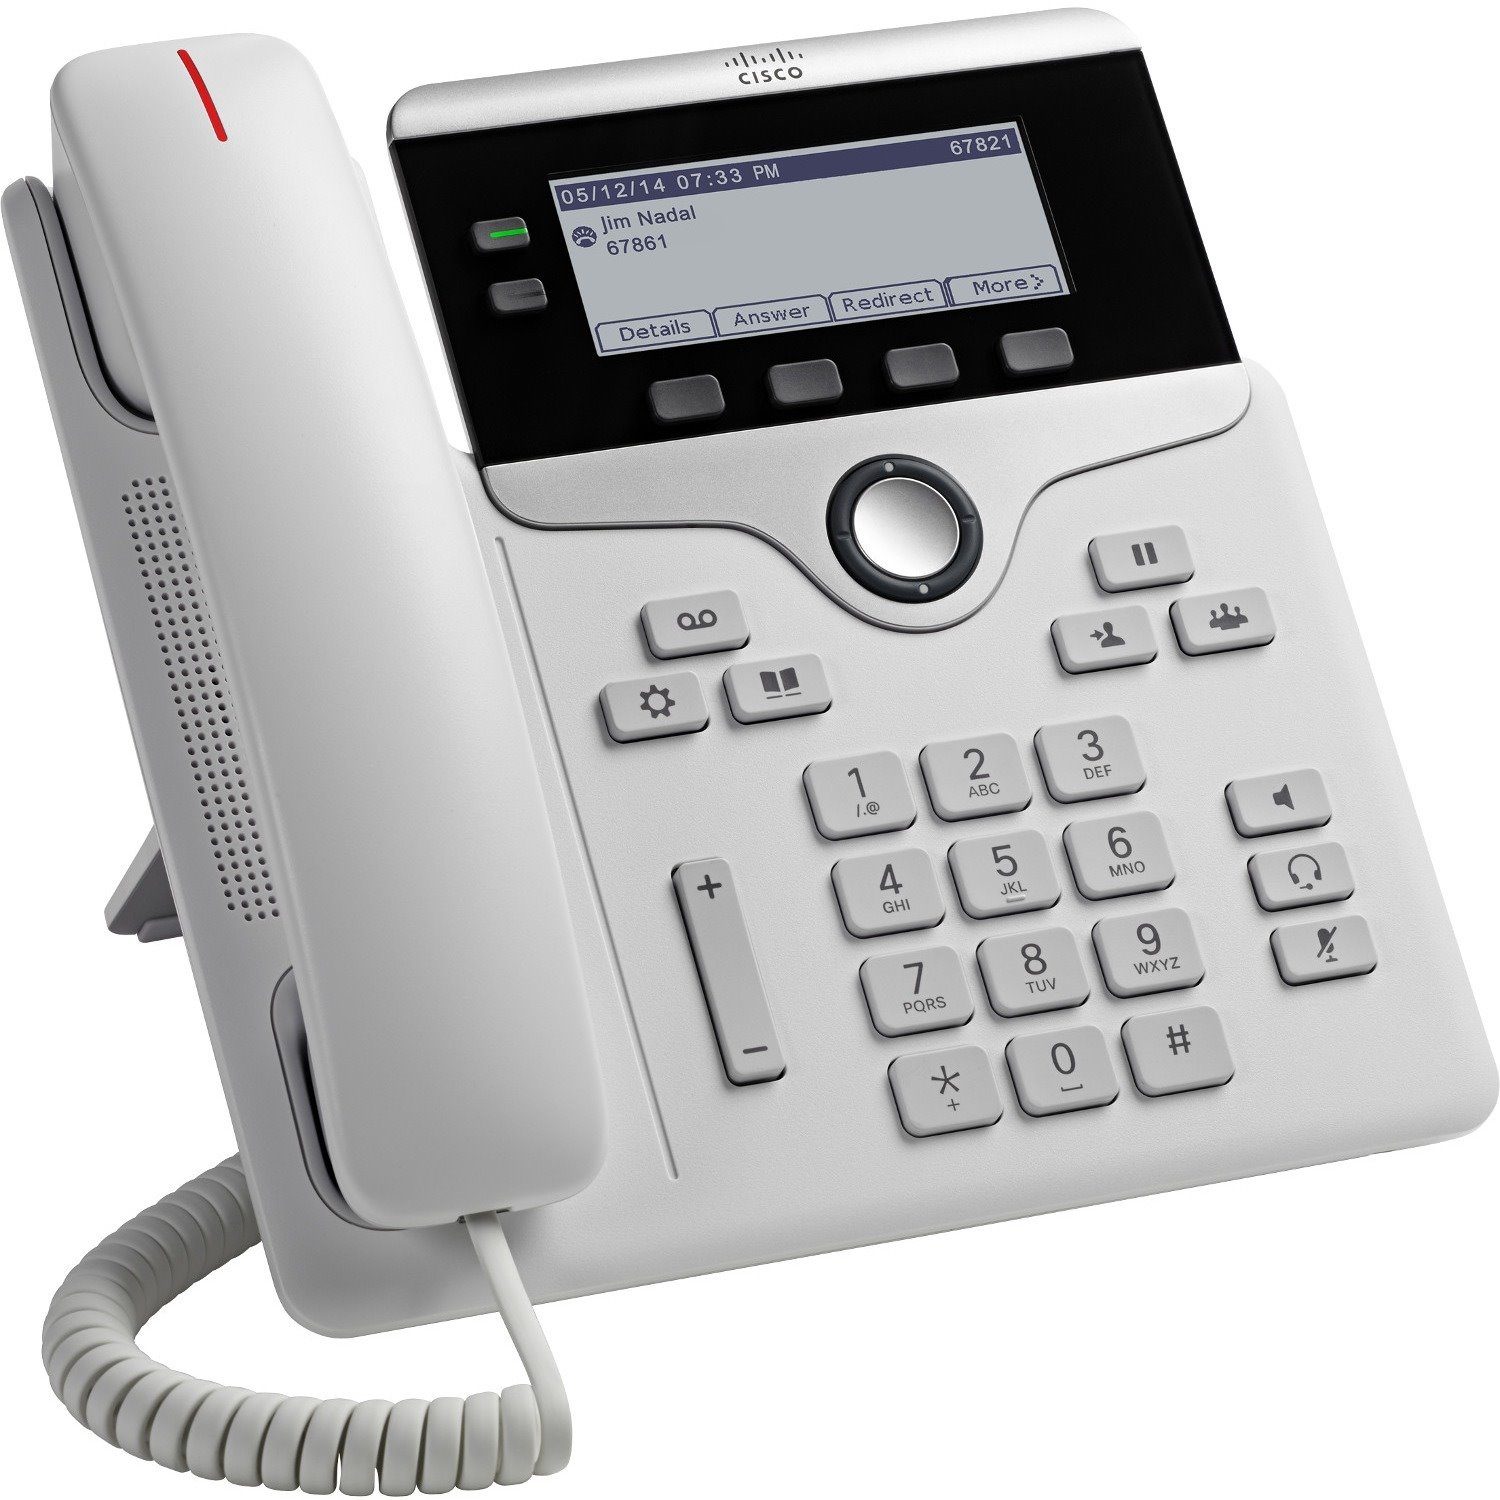 Cisco 7821 IP Phone - Refurbished - Corded - Wall Mountable, Desktop - White